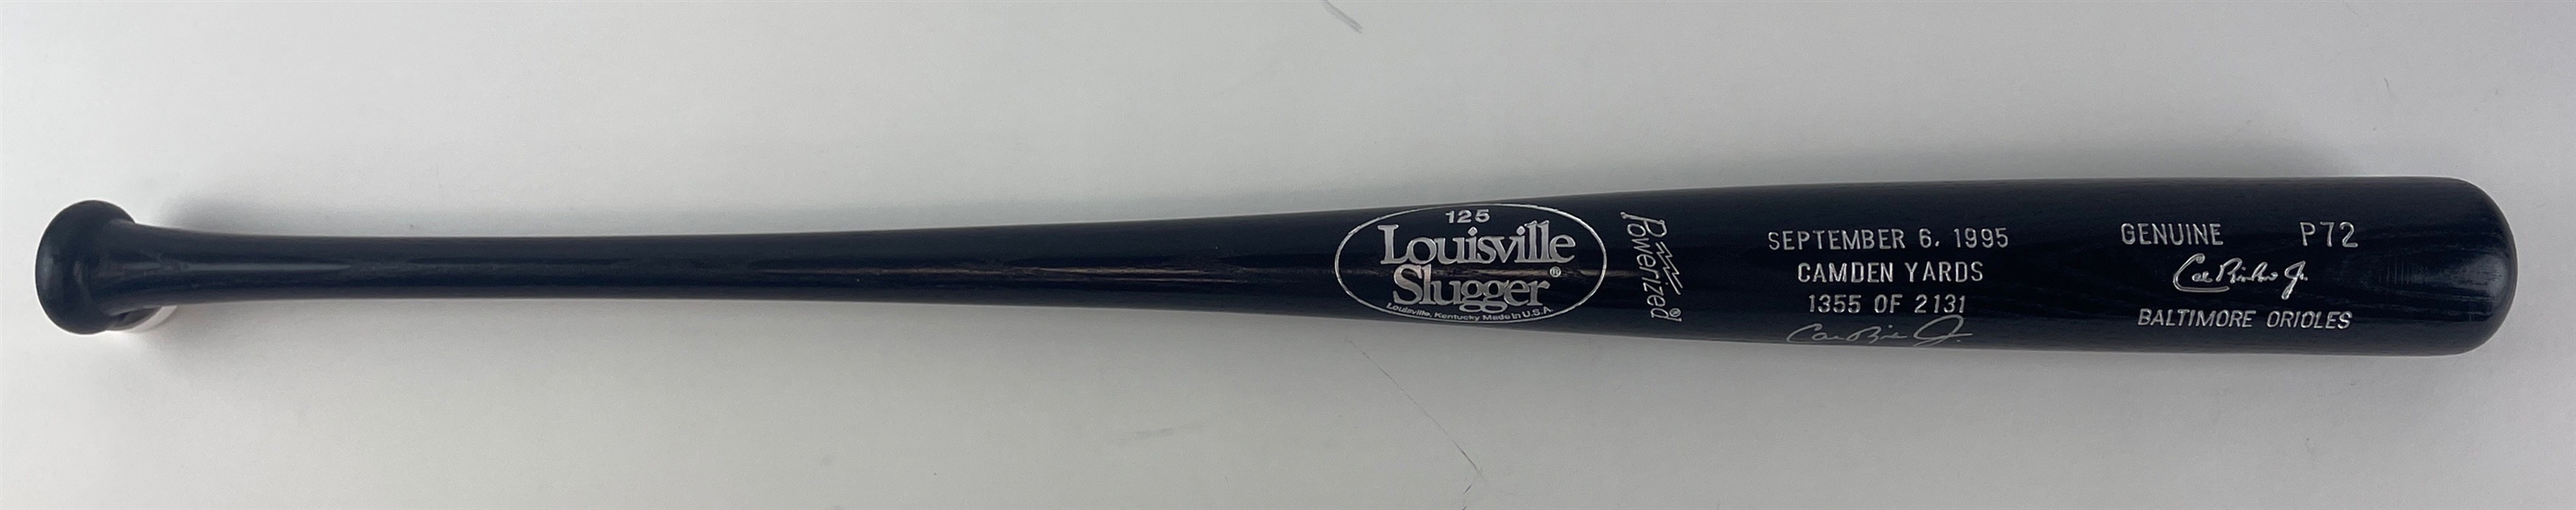 Cal Ripken Jr. Signed Louisville 1355 / 2131 Commemorative Bat (JSA Sticker Only)